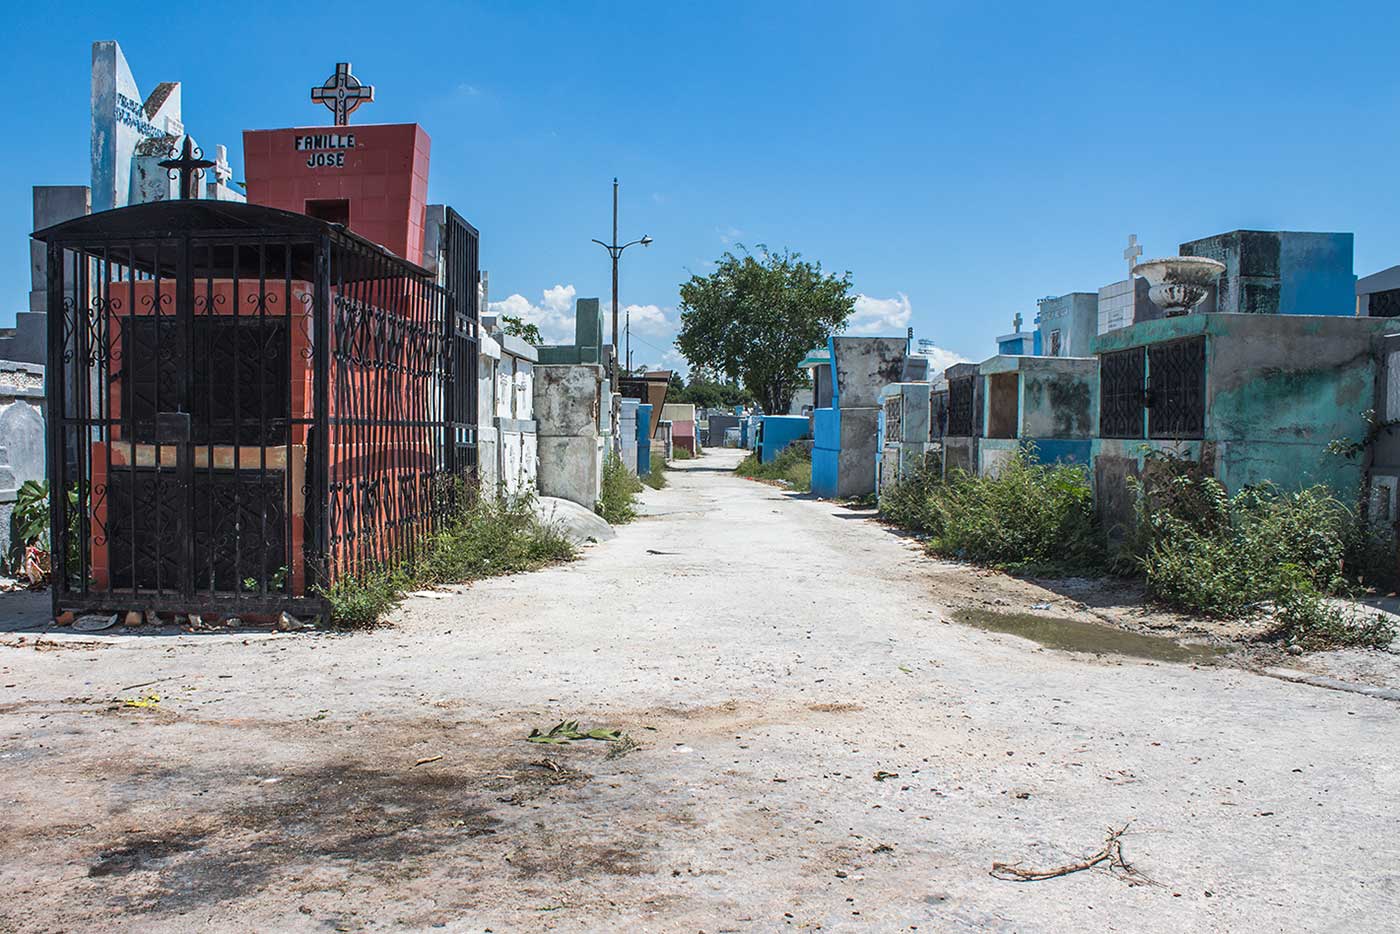 Grand Cemetery of Port-au-Prince, Haiti